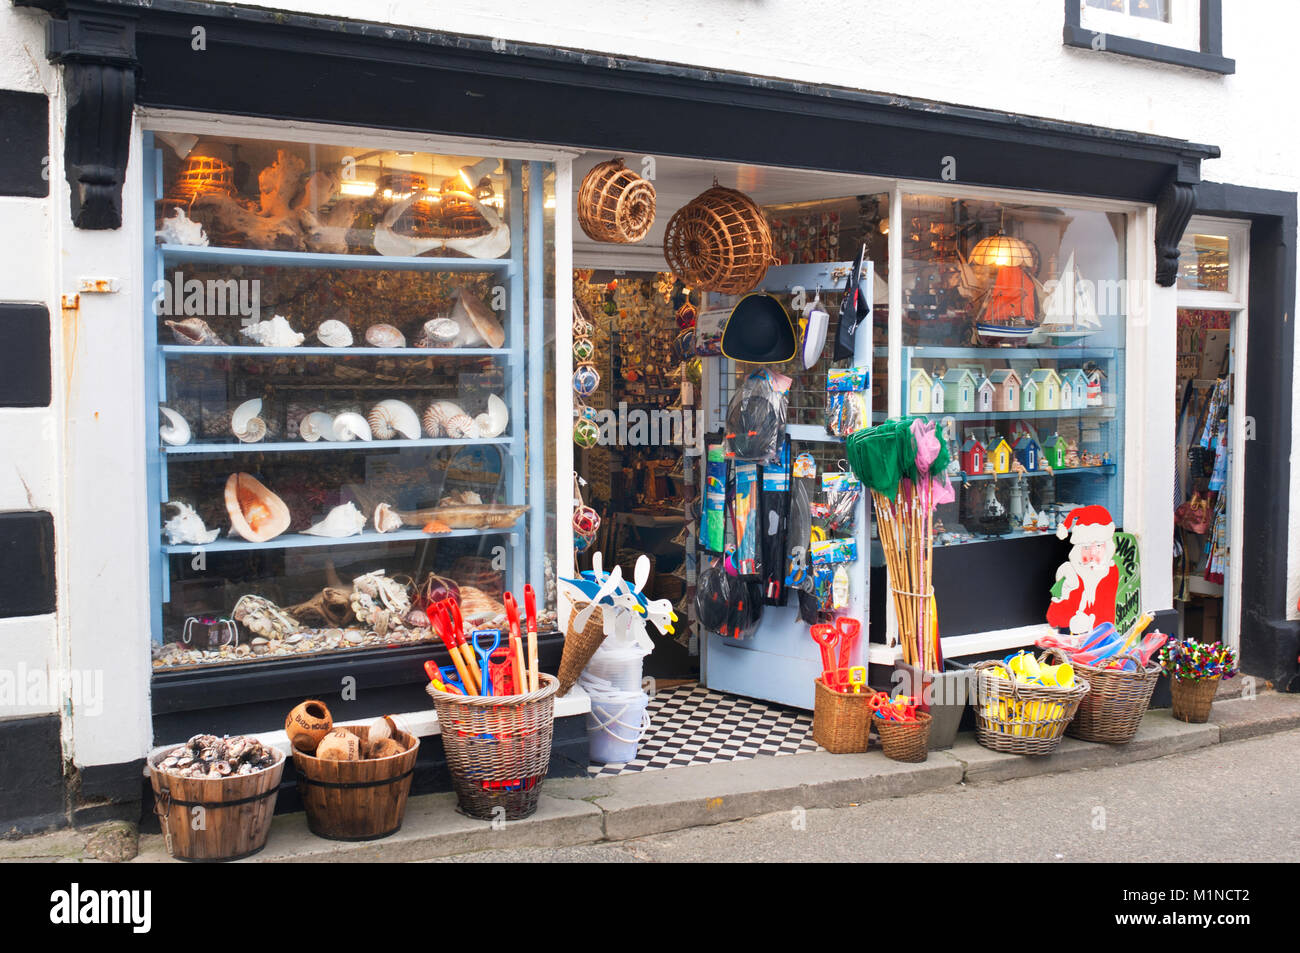 New Gift Shop Opens on Pitt Street - Choose Cornwall : Choose Cornwall